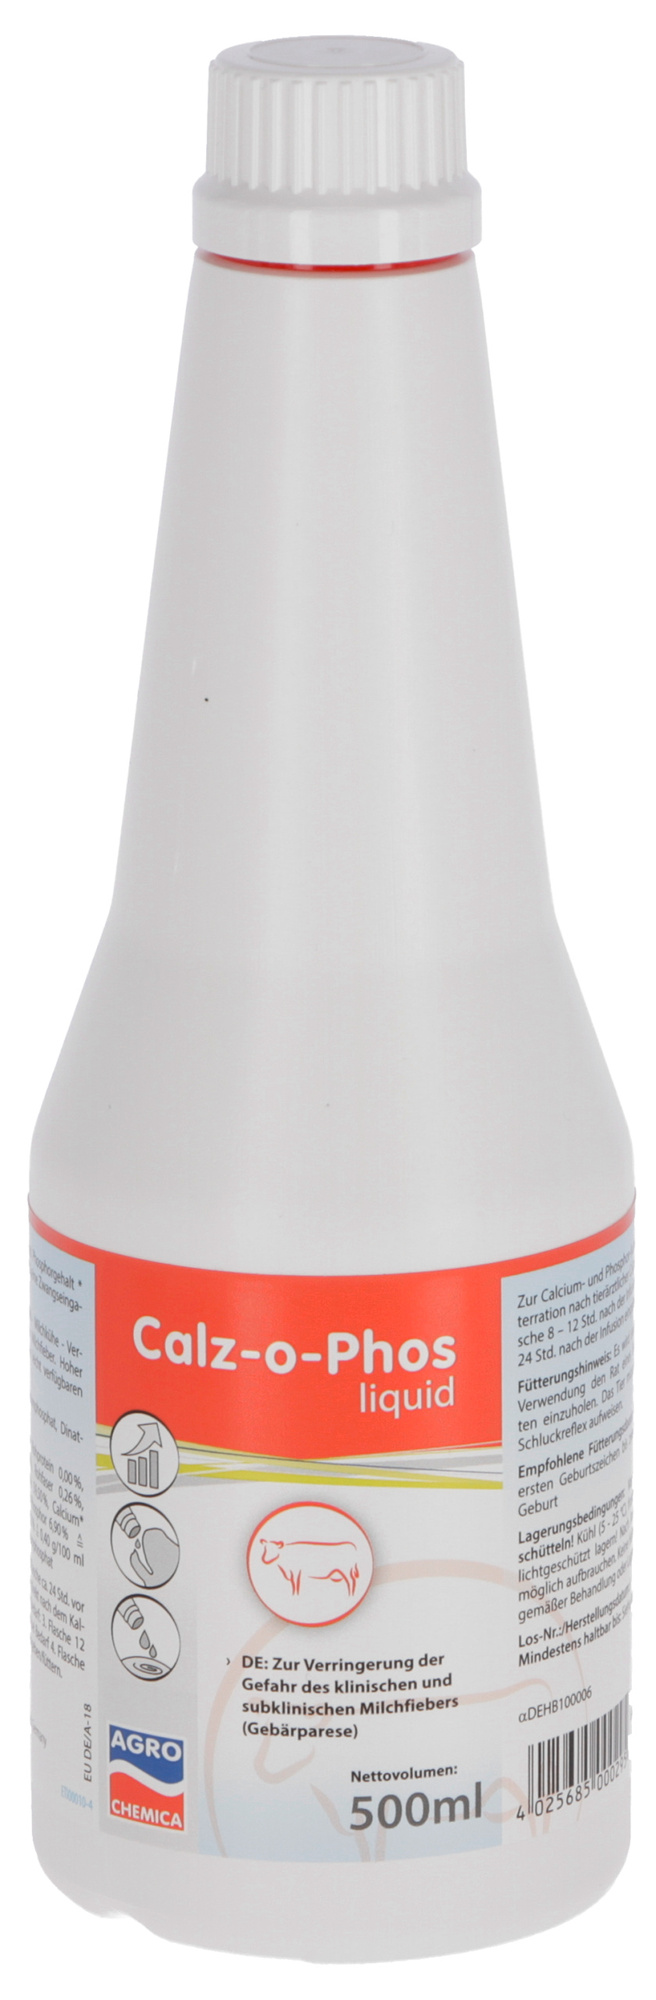 Ergänzungsfuttermittel Calz-o-Phos liquid - 500 ml